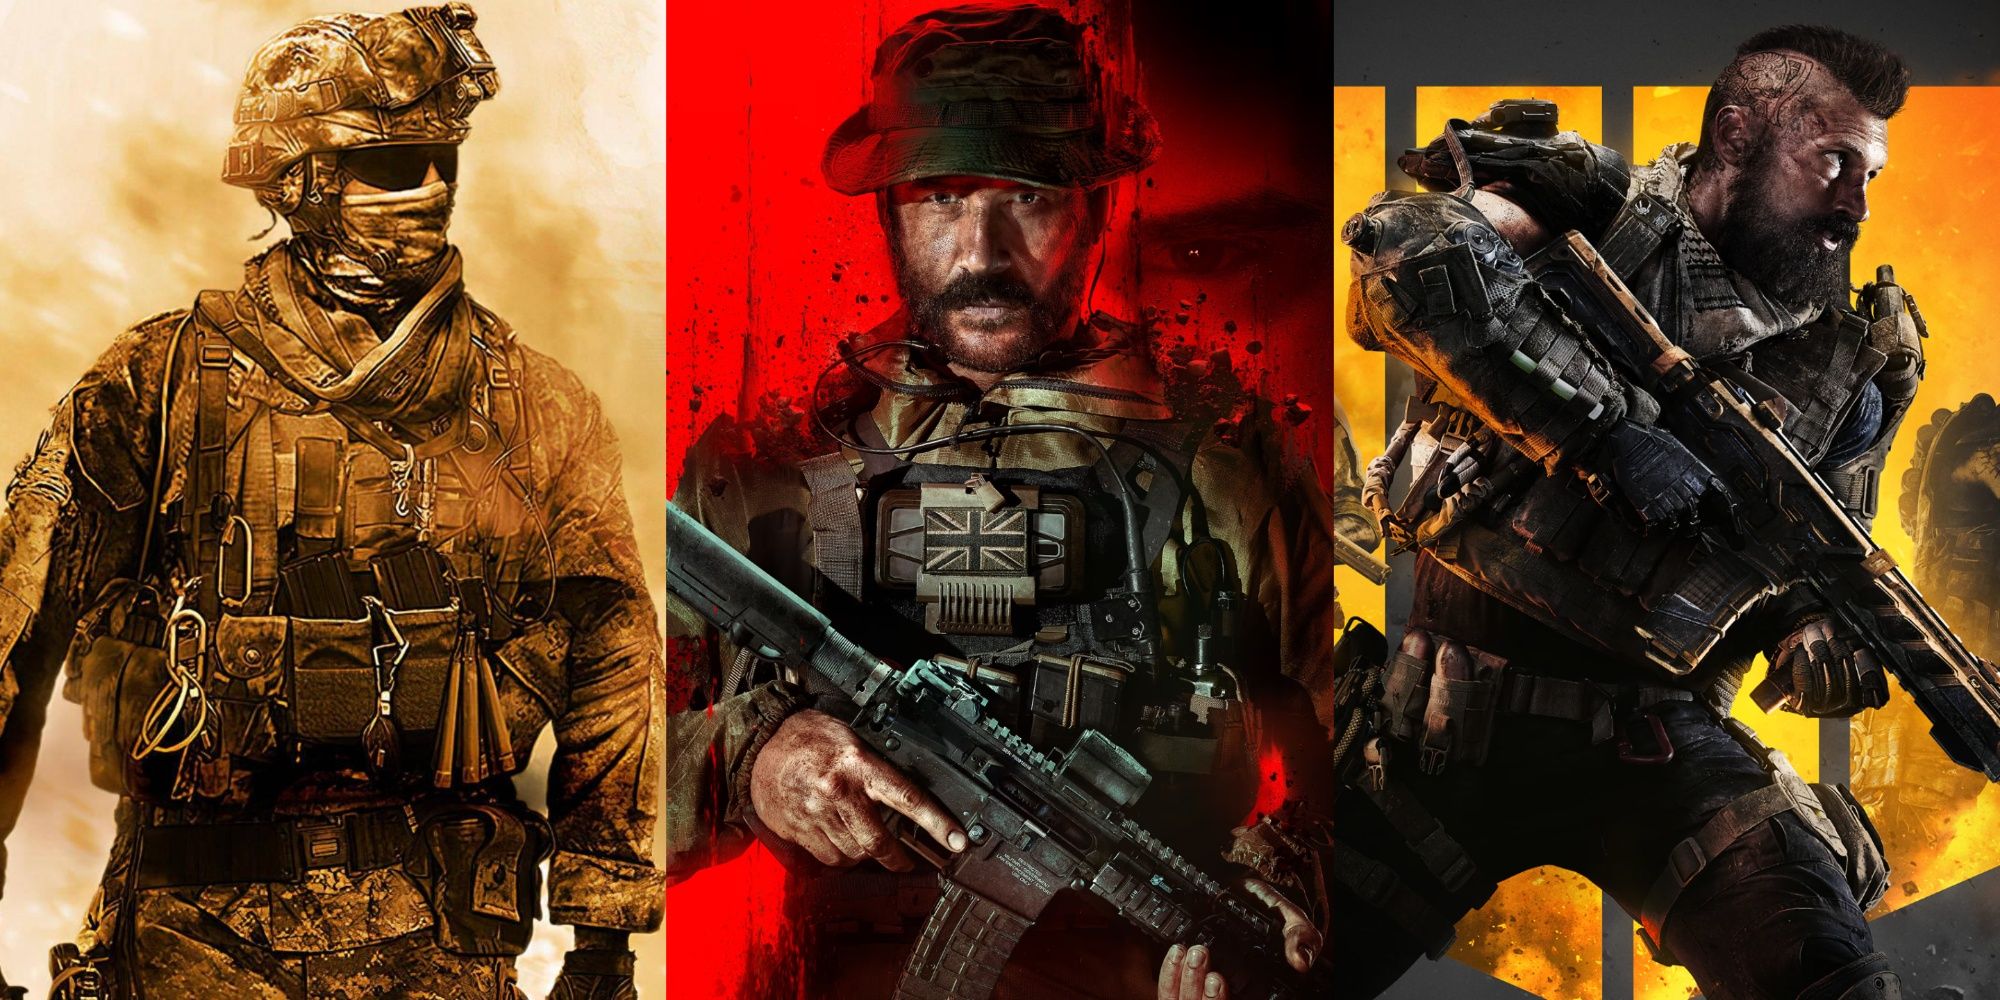 characters from modern warfare 2, modern warfare 3, and black ops 4